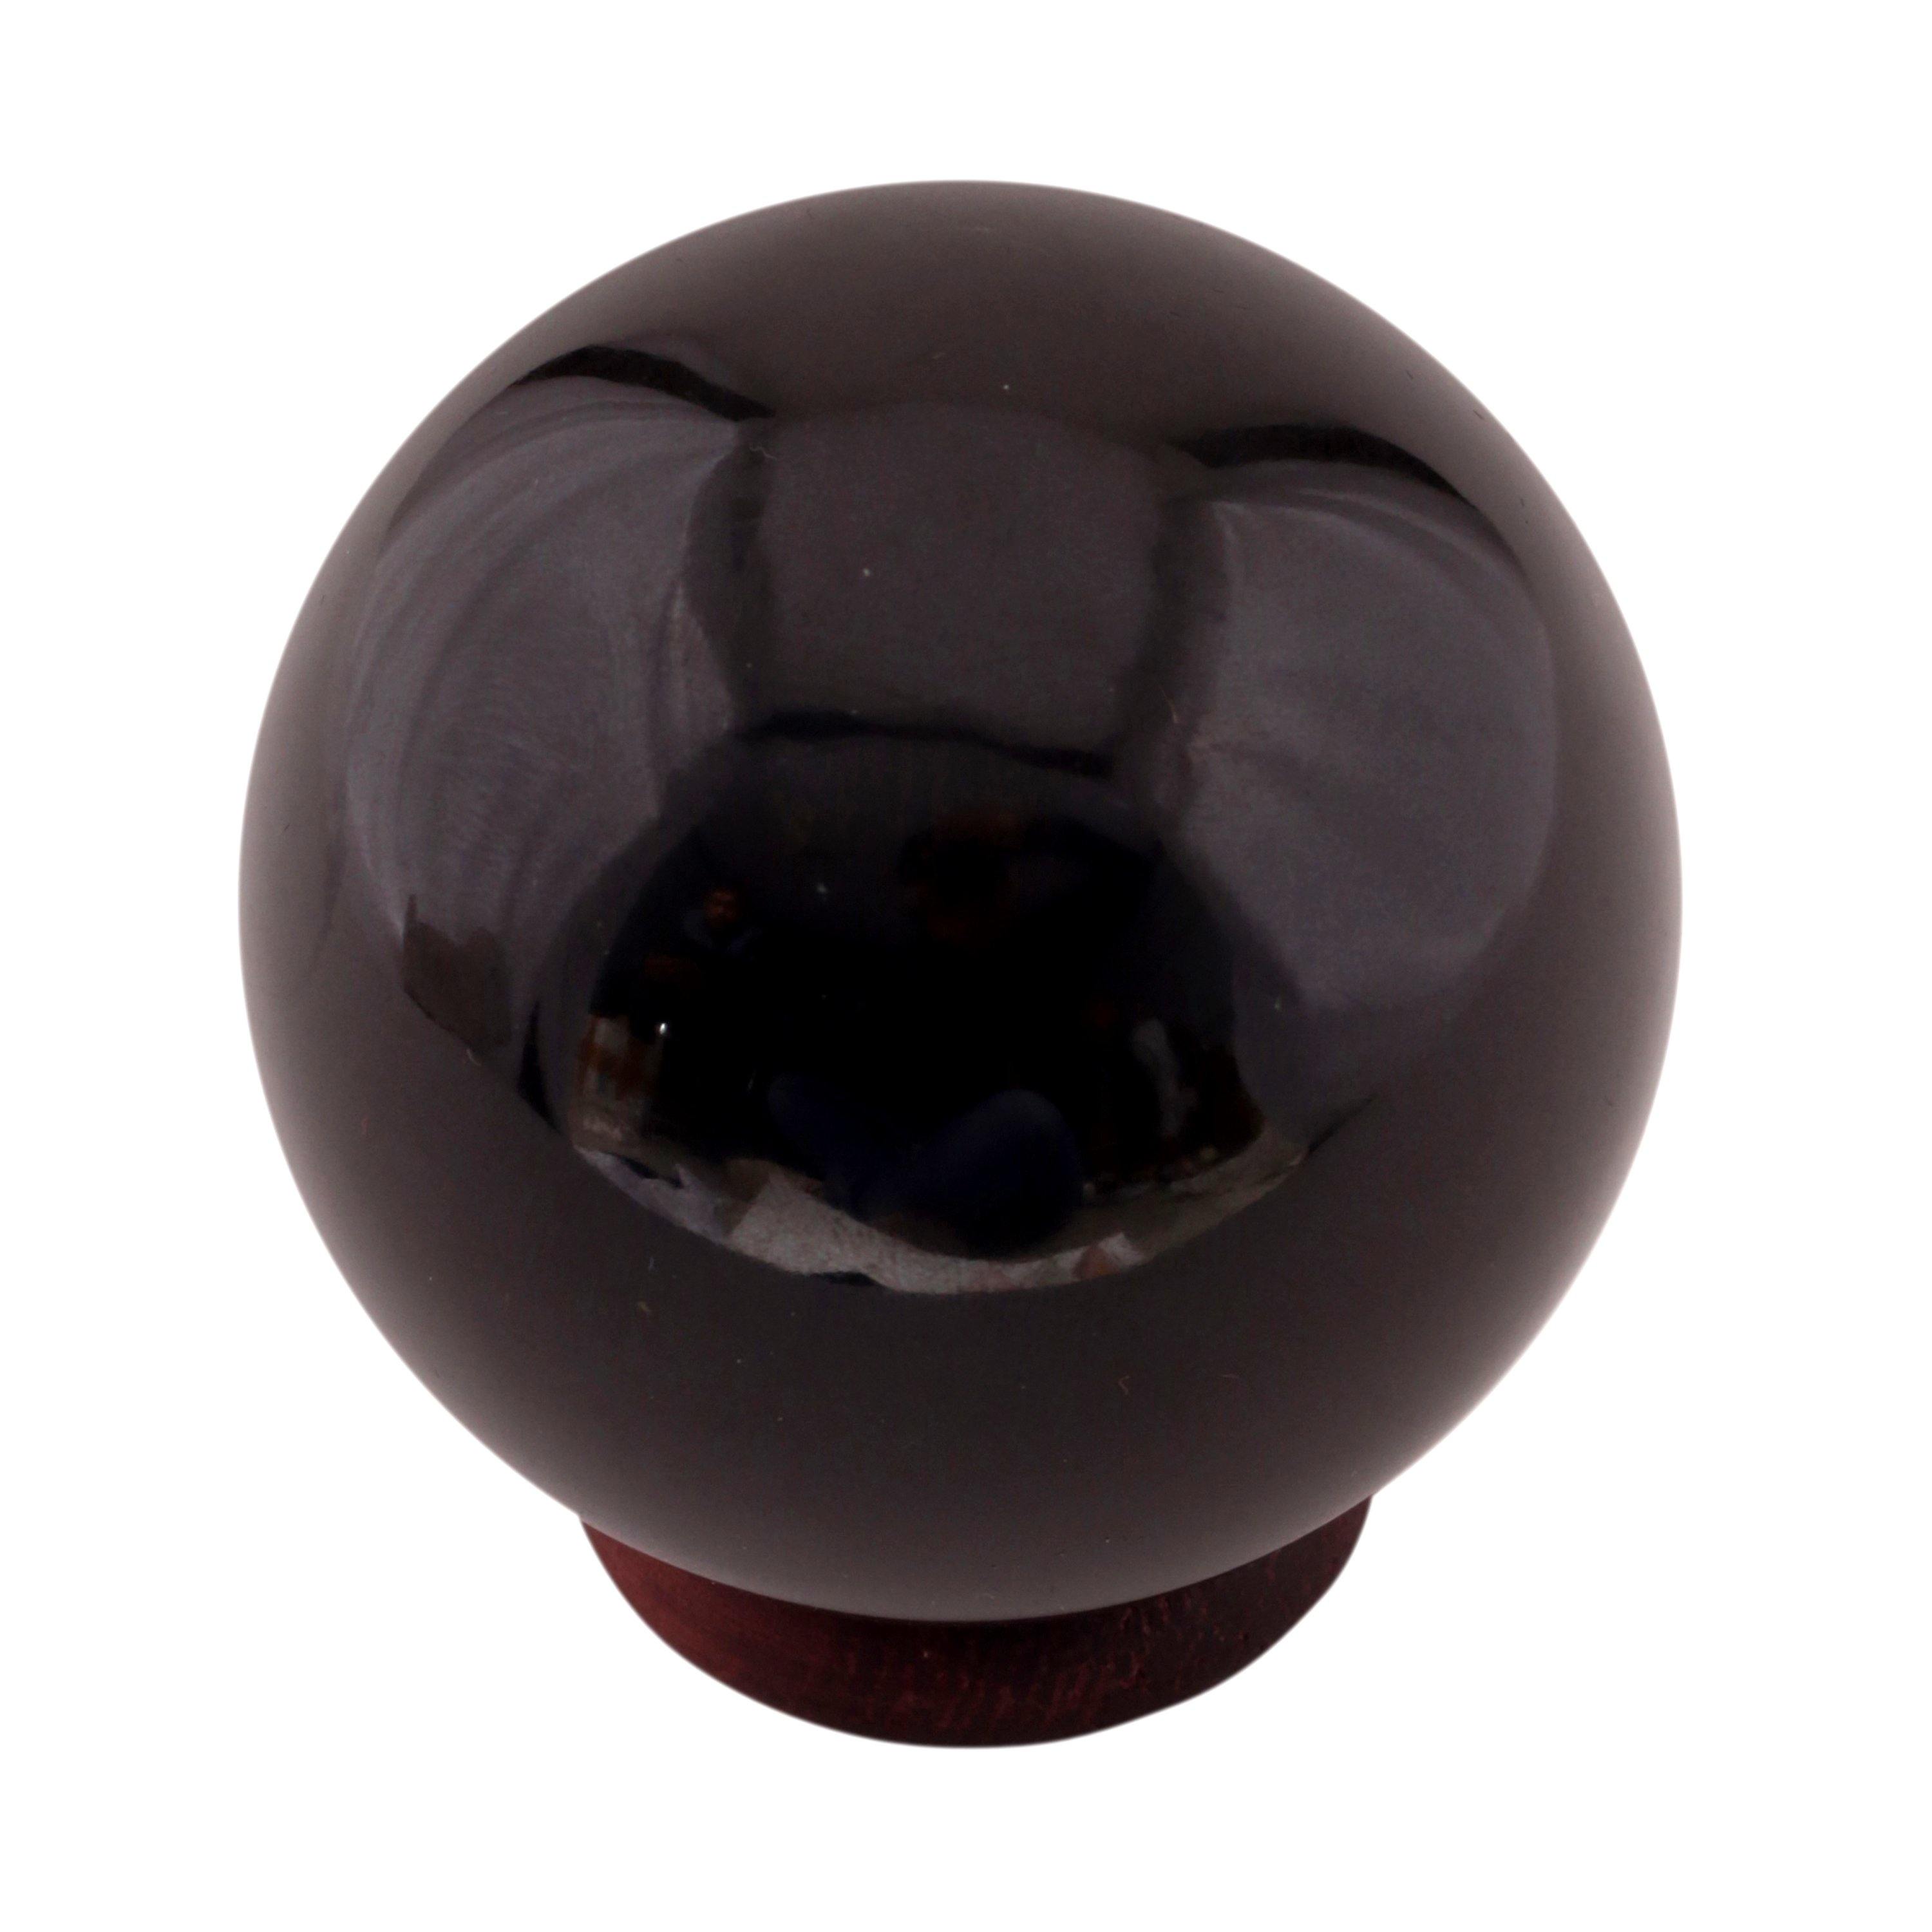 Healing Crystals - Black Obsidian Sphere 10 Kg Lot